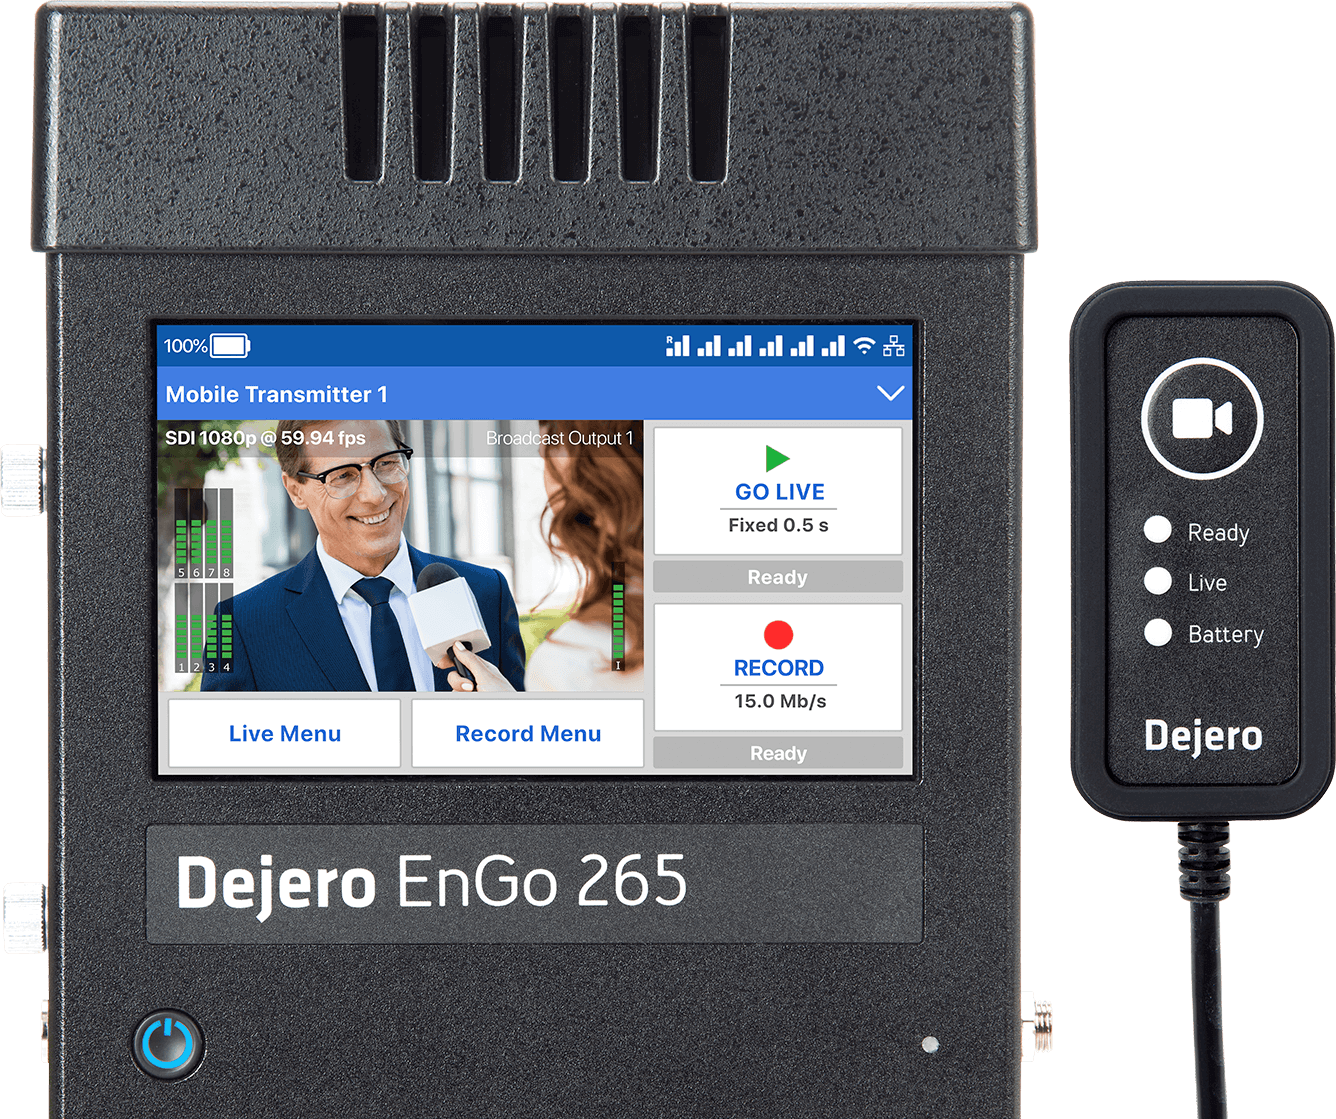 Dejero EnGo 265 Simple and intuitive